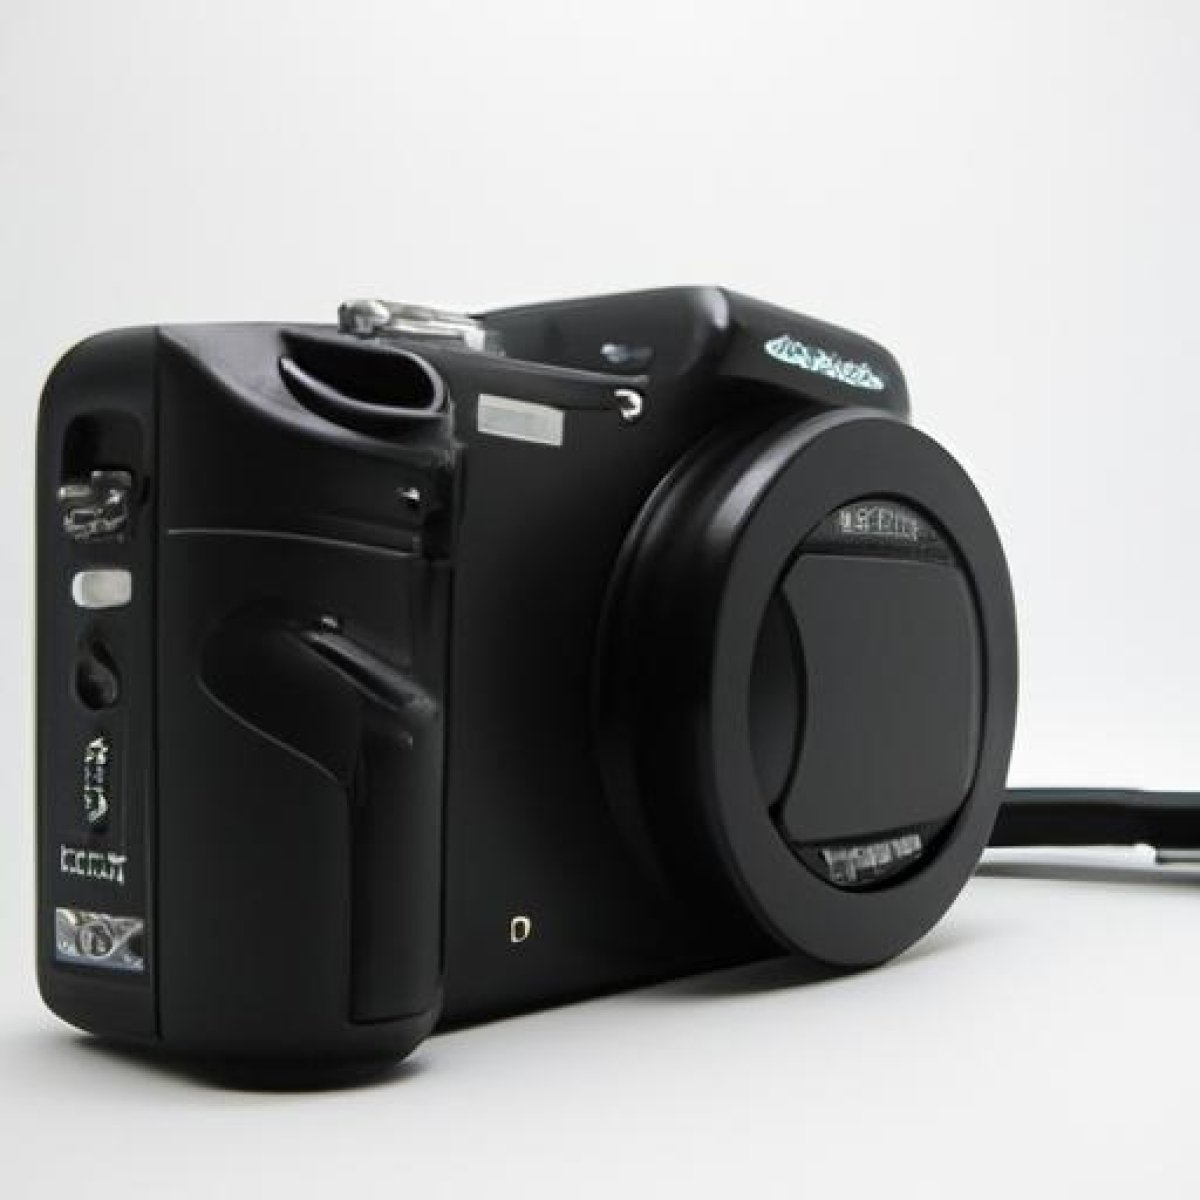 Canon powershot sx620 digital camera